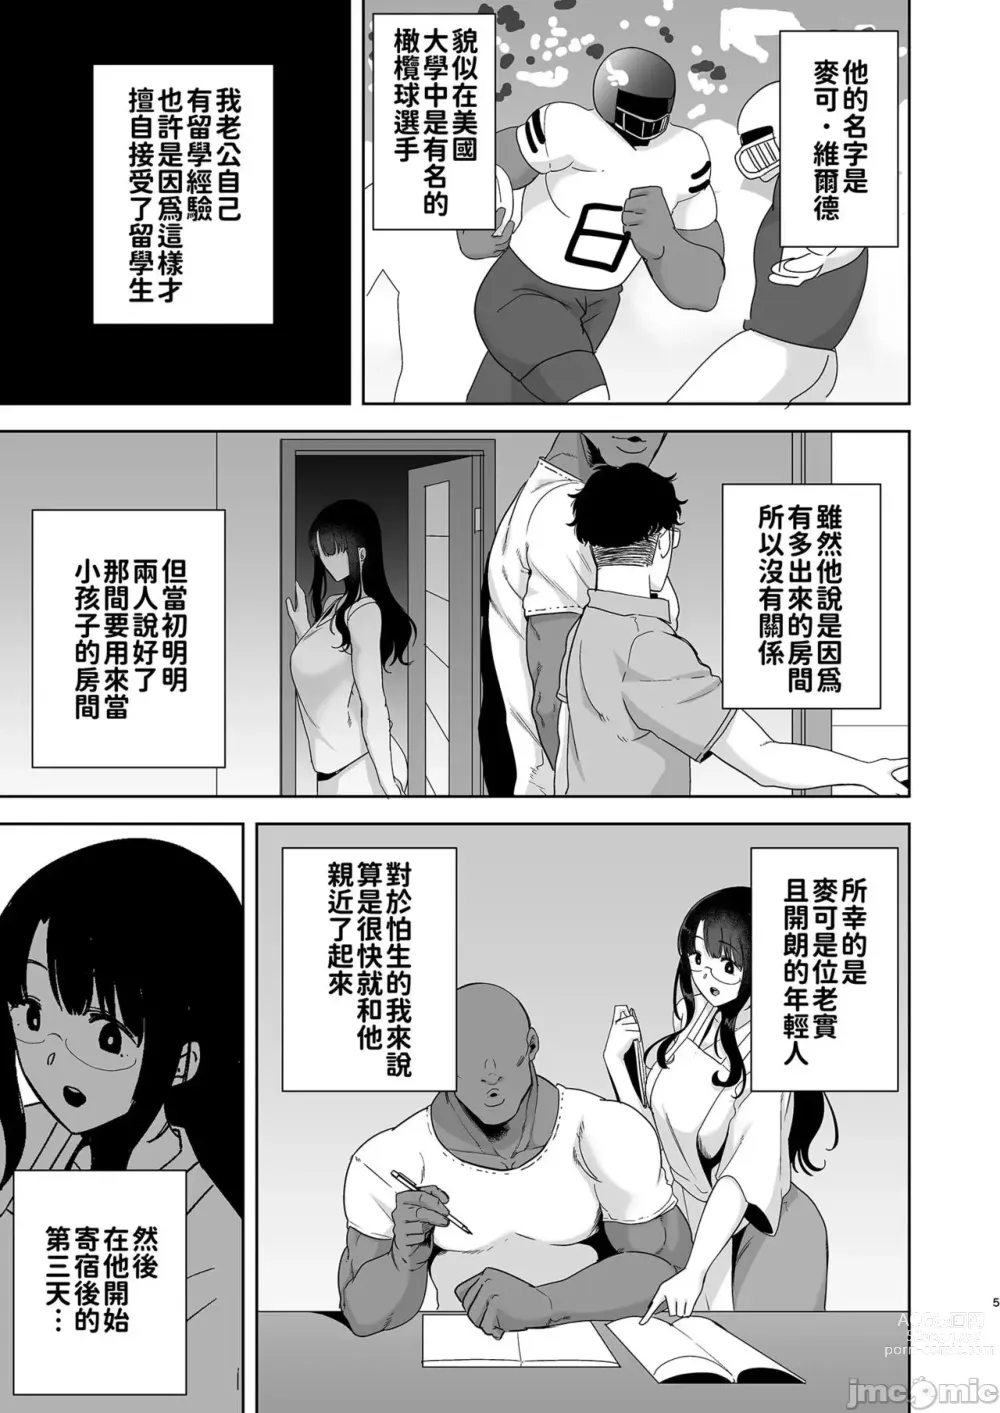 Page 5 of manga ワイルド式日本人妻の寝取り方 其ノ一&二&三&四 眼鏡あり.ver